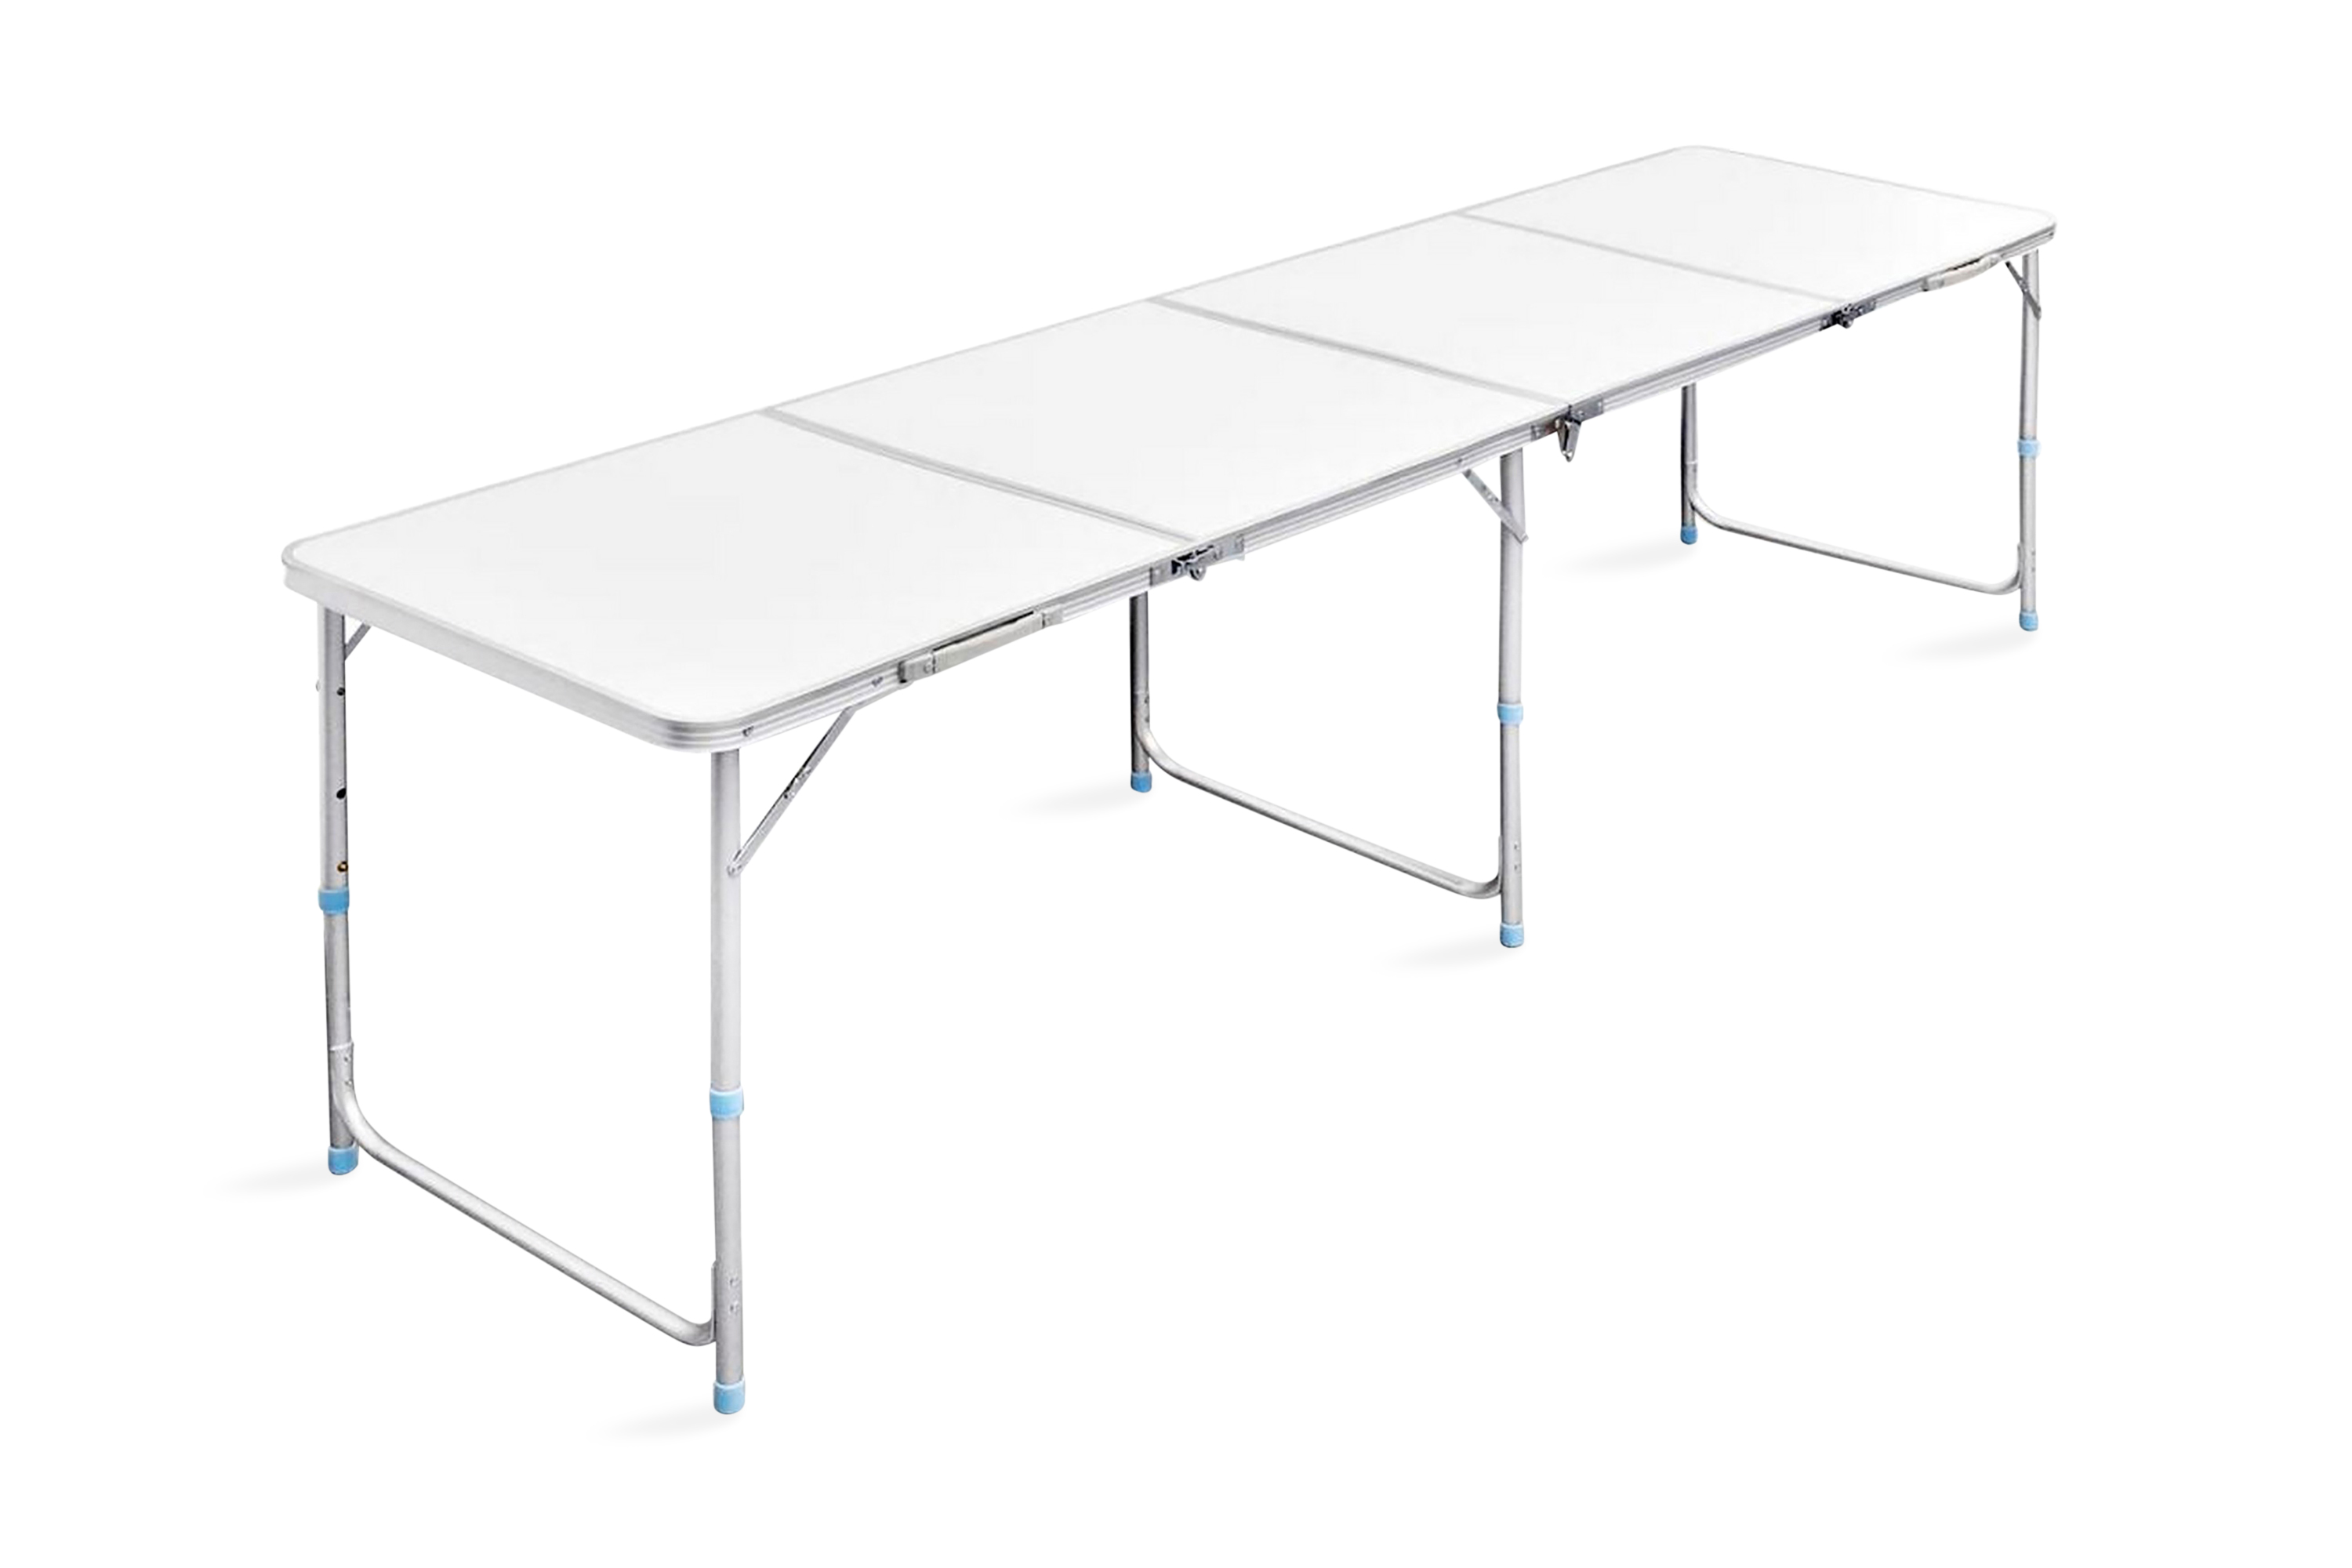 Hopfällbart campingbord med justerbar höjd Aluminium 240x60 - Vit 41327